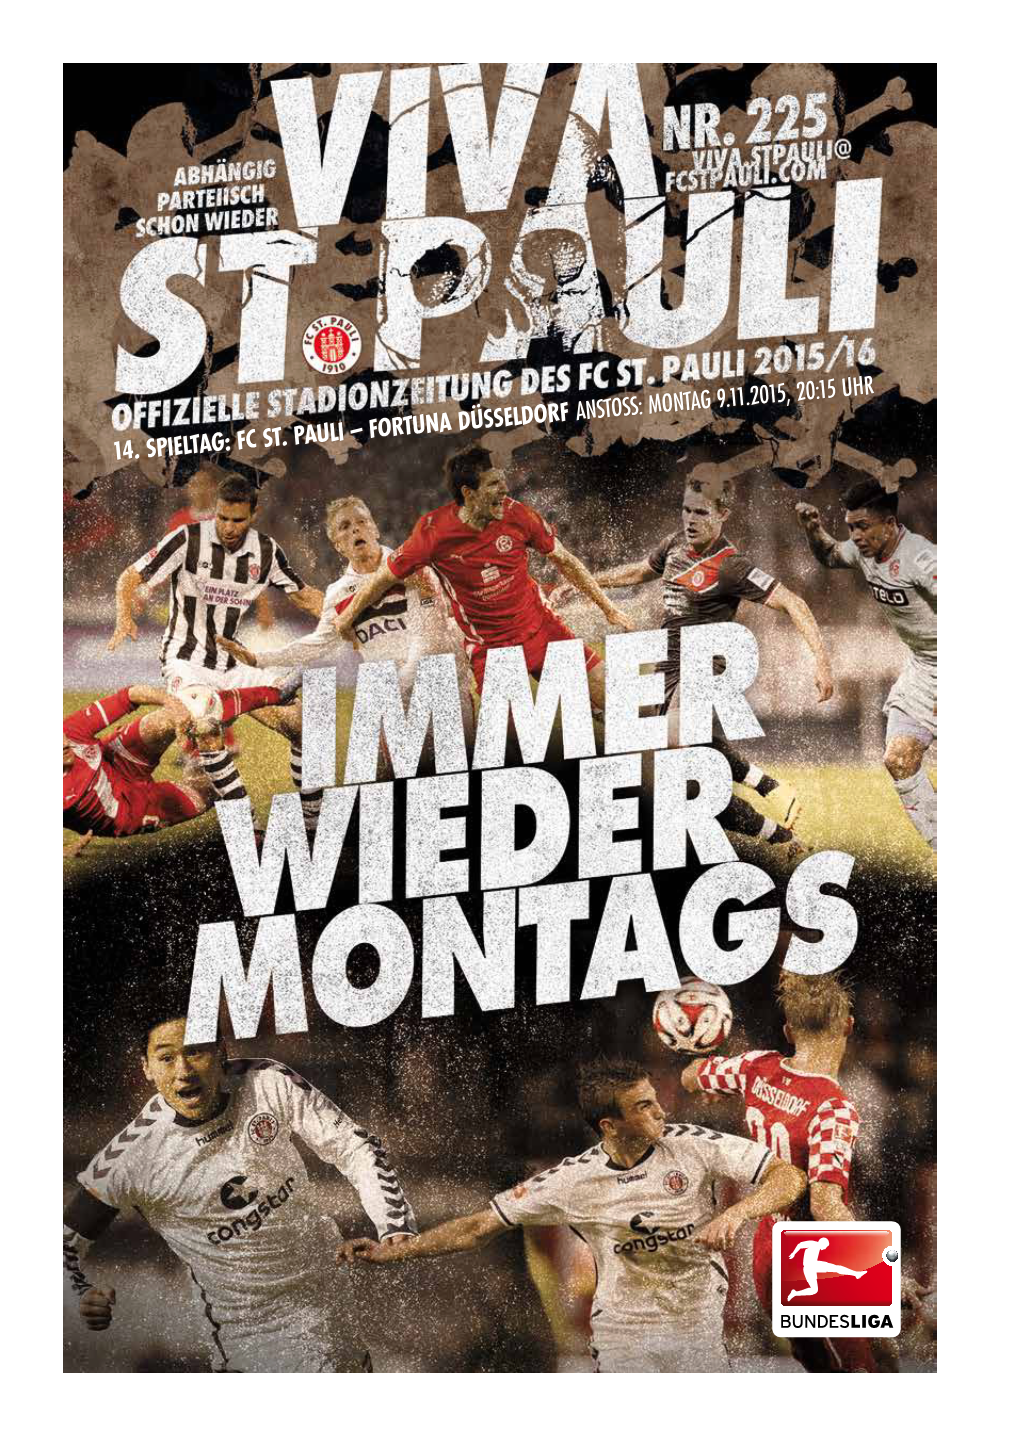 14. Spieltag: FC St. Pauli – Fortuna Düsseldorf Anstoss: Montag 9.11.2015, 20:15